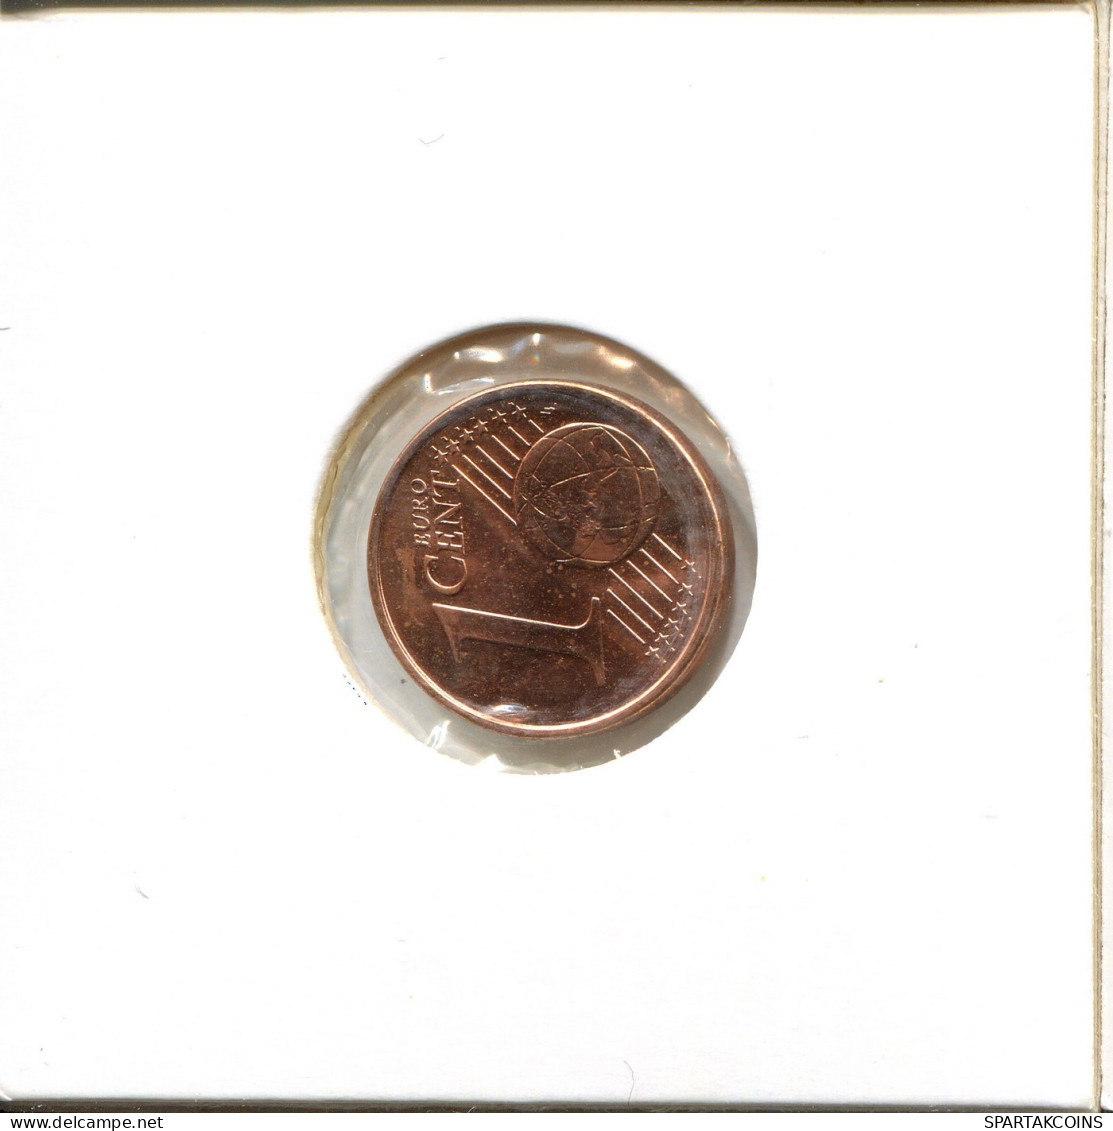 1 EURO CENT 2008 FRANCE Coin #EU098.U.A - Frankreich